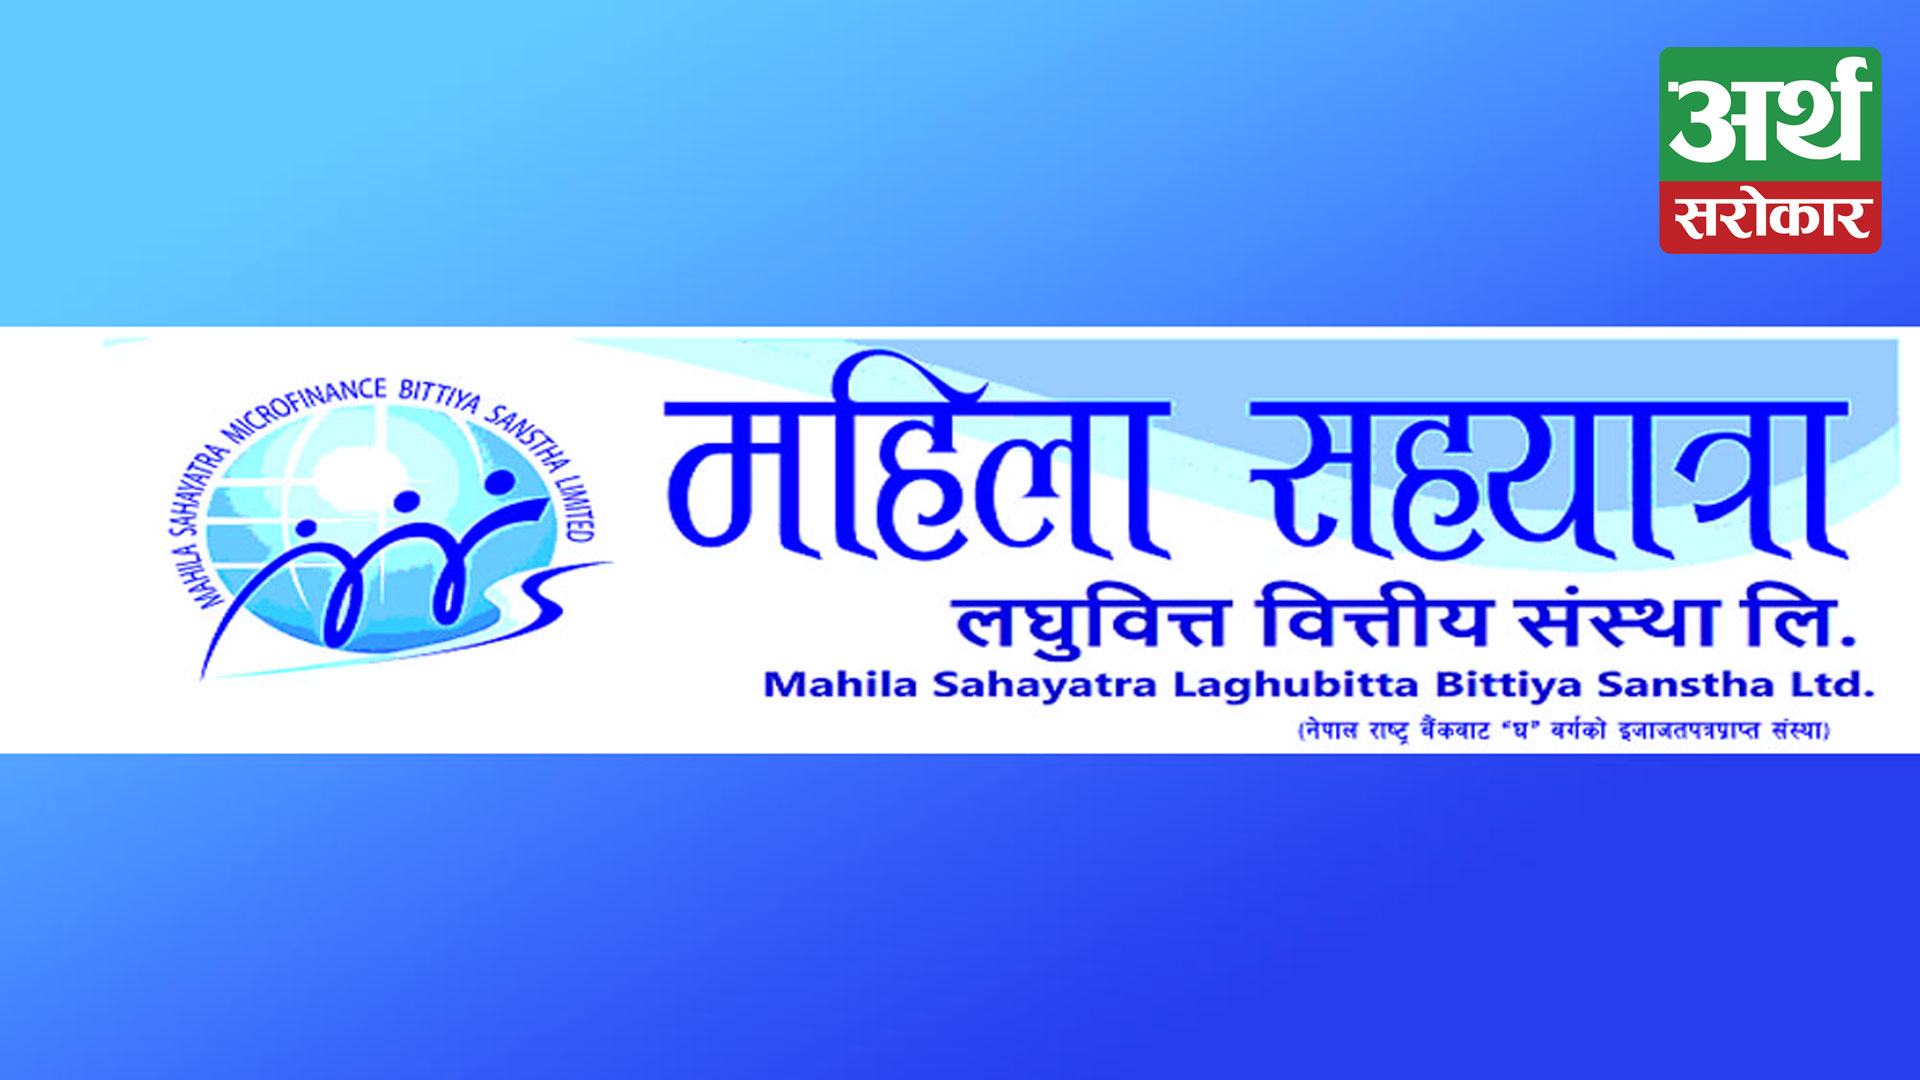 Mahila Sahyatra Laghubitta Bittiya Sanstha Ltd announces to distribute 10.53% dividend